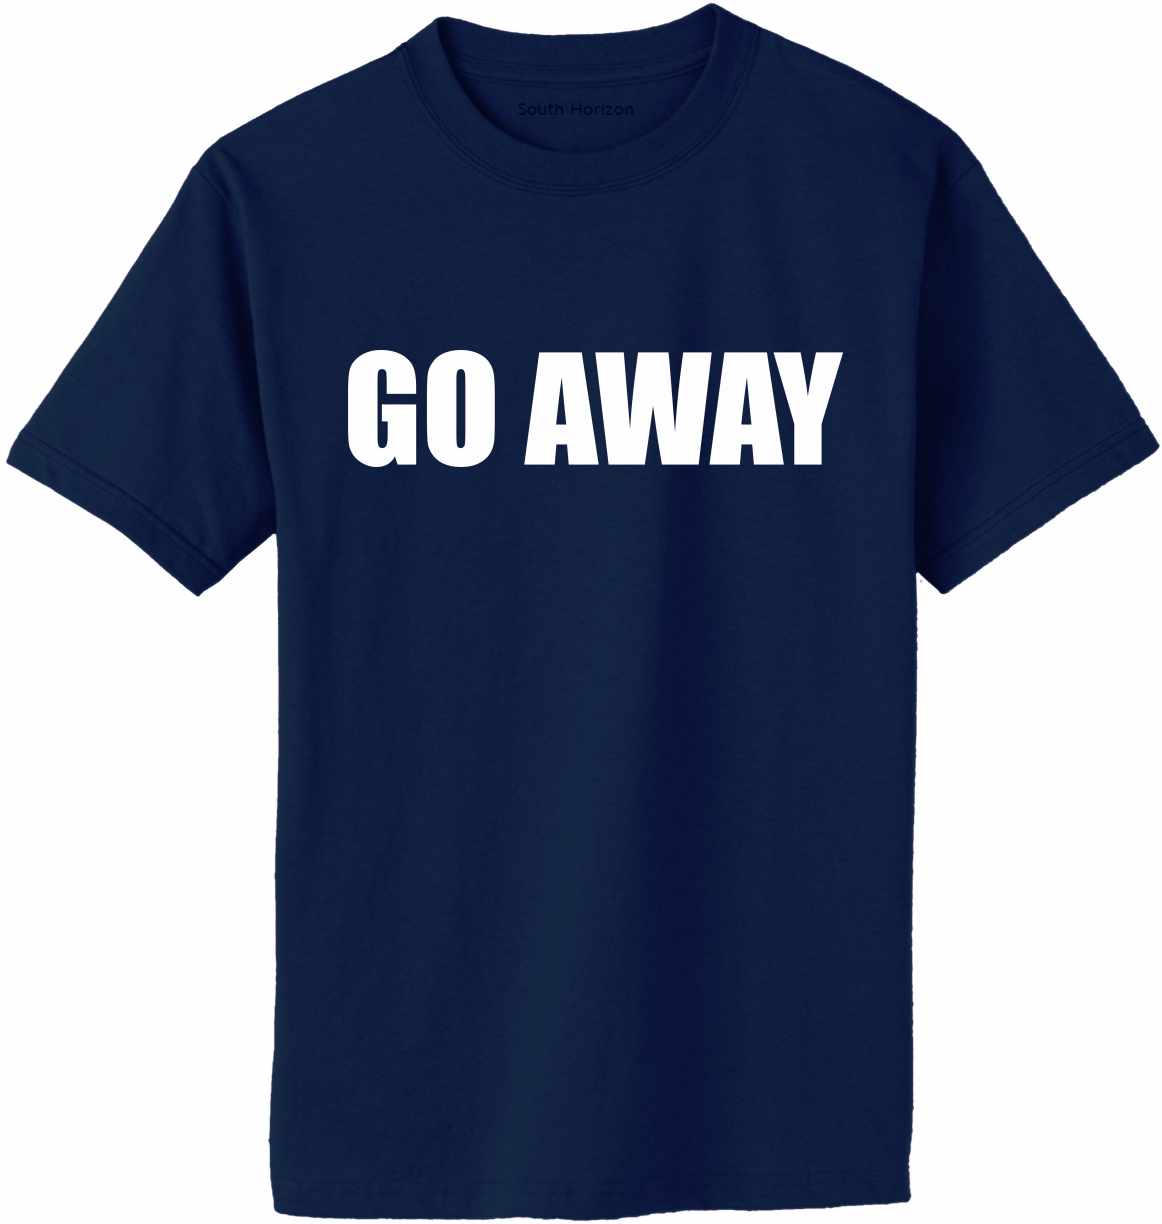 GO AWAY Adult T-Shirt (#719-1)